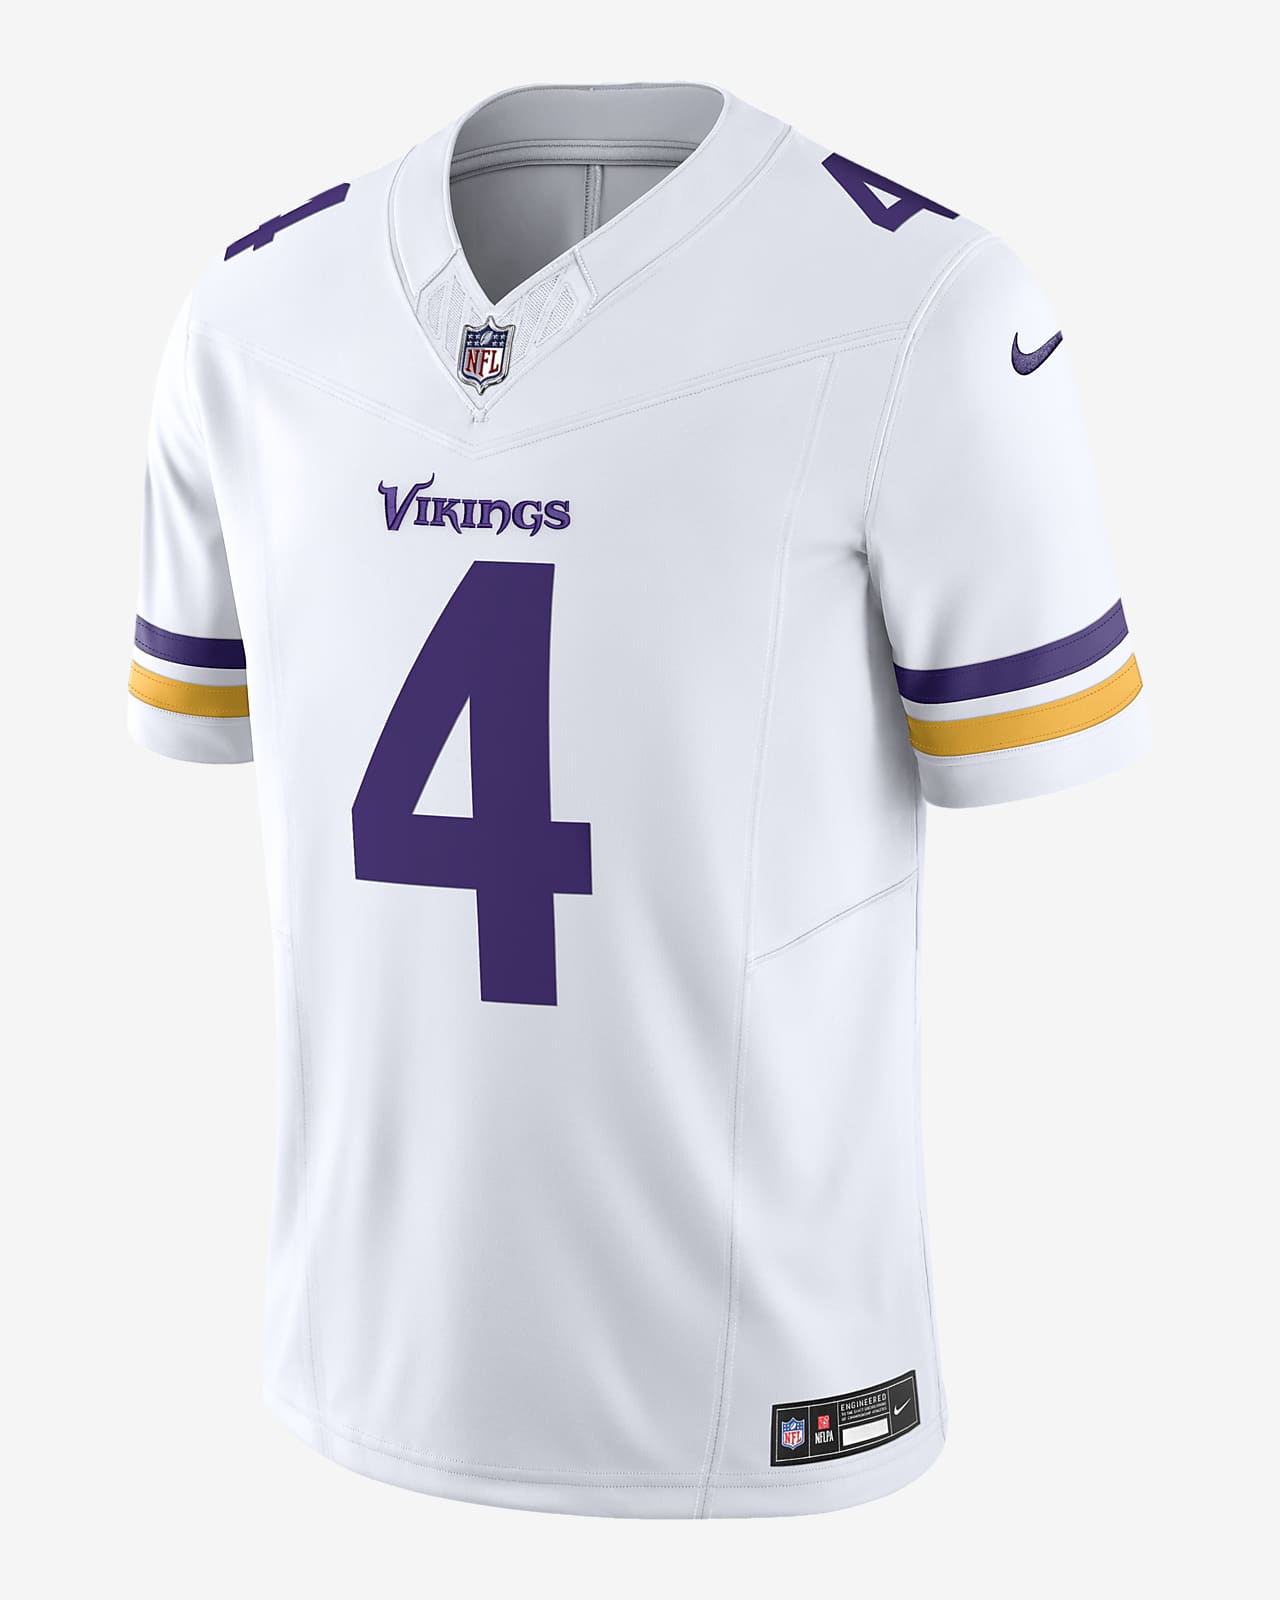 Dalvin Cook Minnesota Vikings Men's Nike Dri-FIT NFL Limited Football Jersey